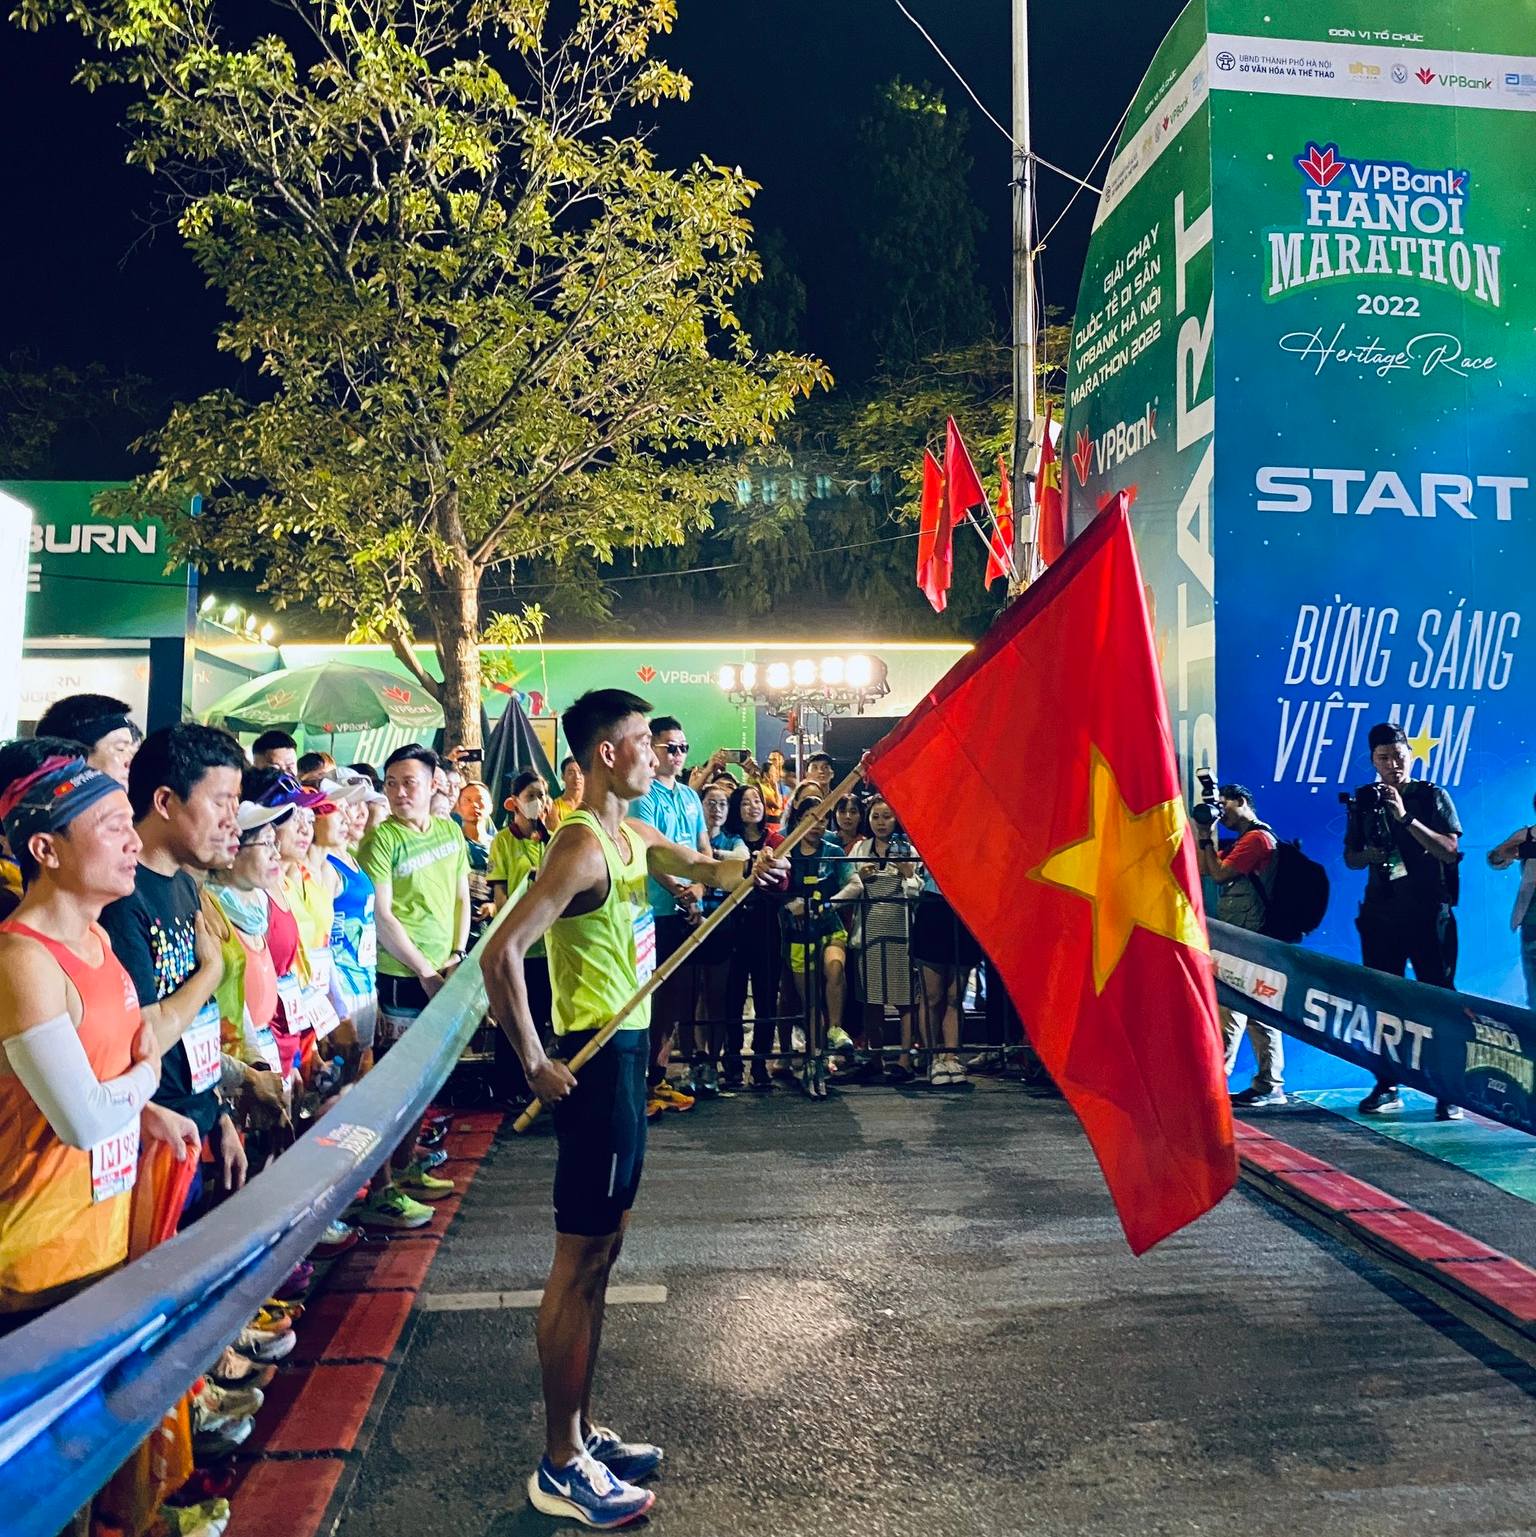 VPBank Hanoi Marathon 2022 Marks Vietnam's Recovery